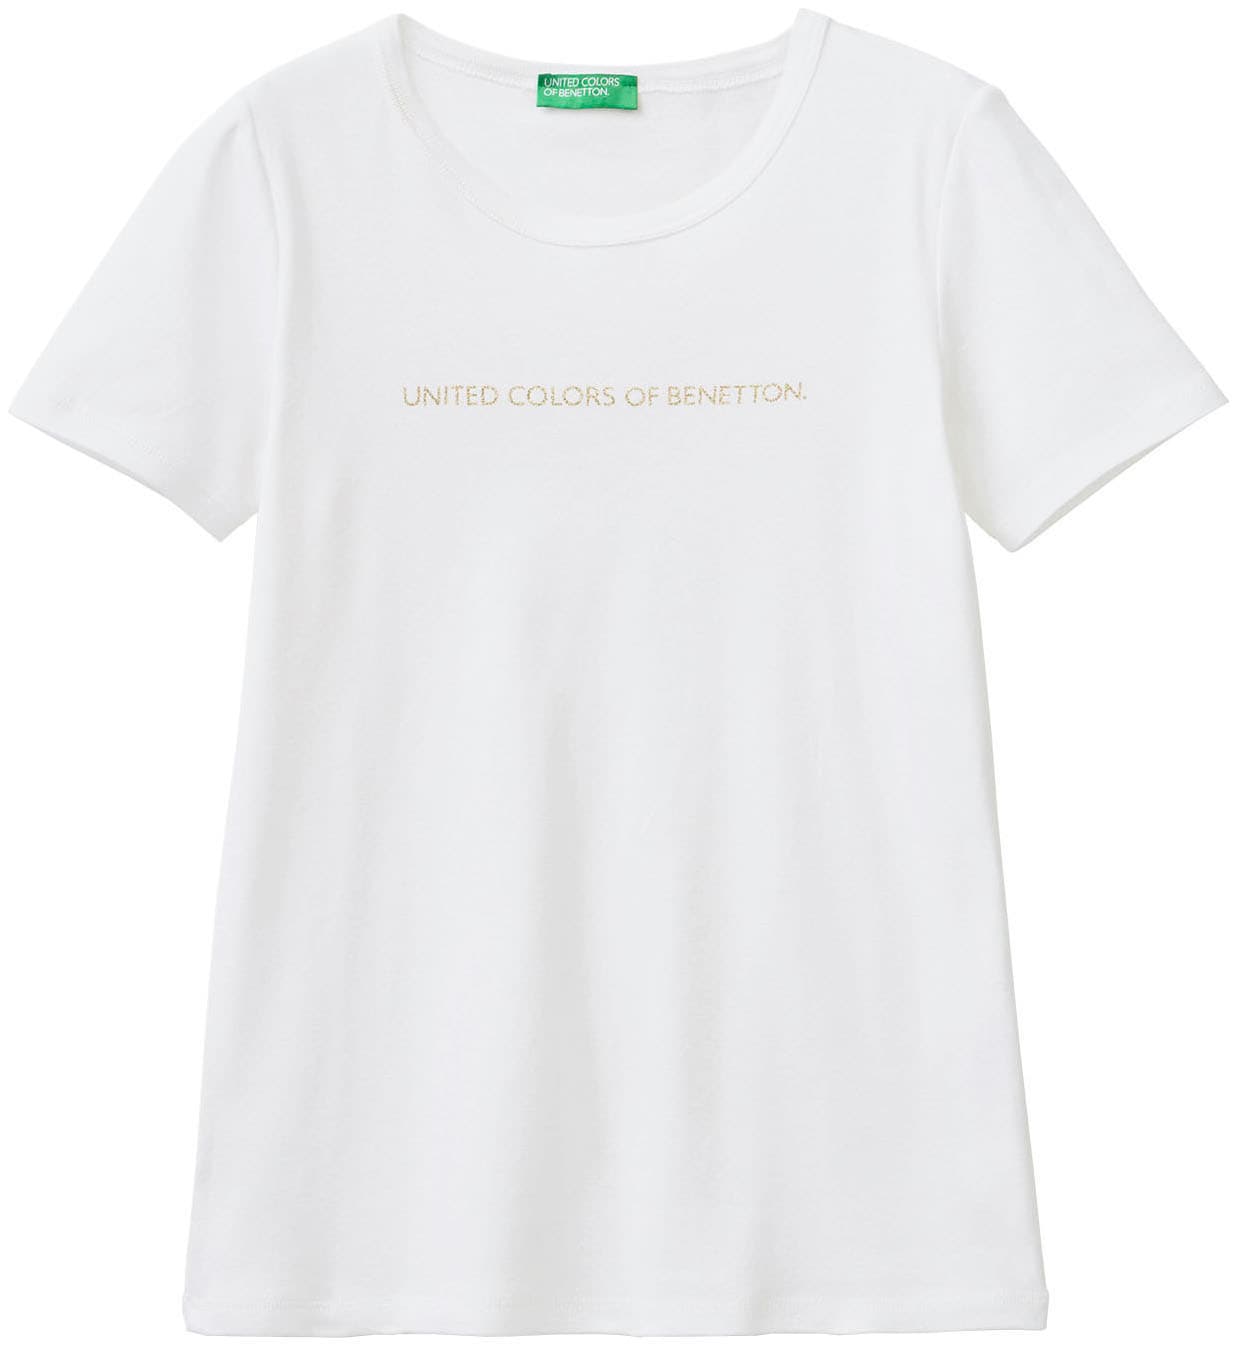 bestellen of | Bestseller 2 T-Shirt, 2), Colors Benetton Doppelpack BAUR im United tlg., (Set, unsere